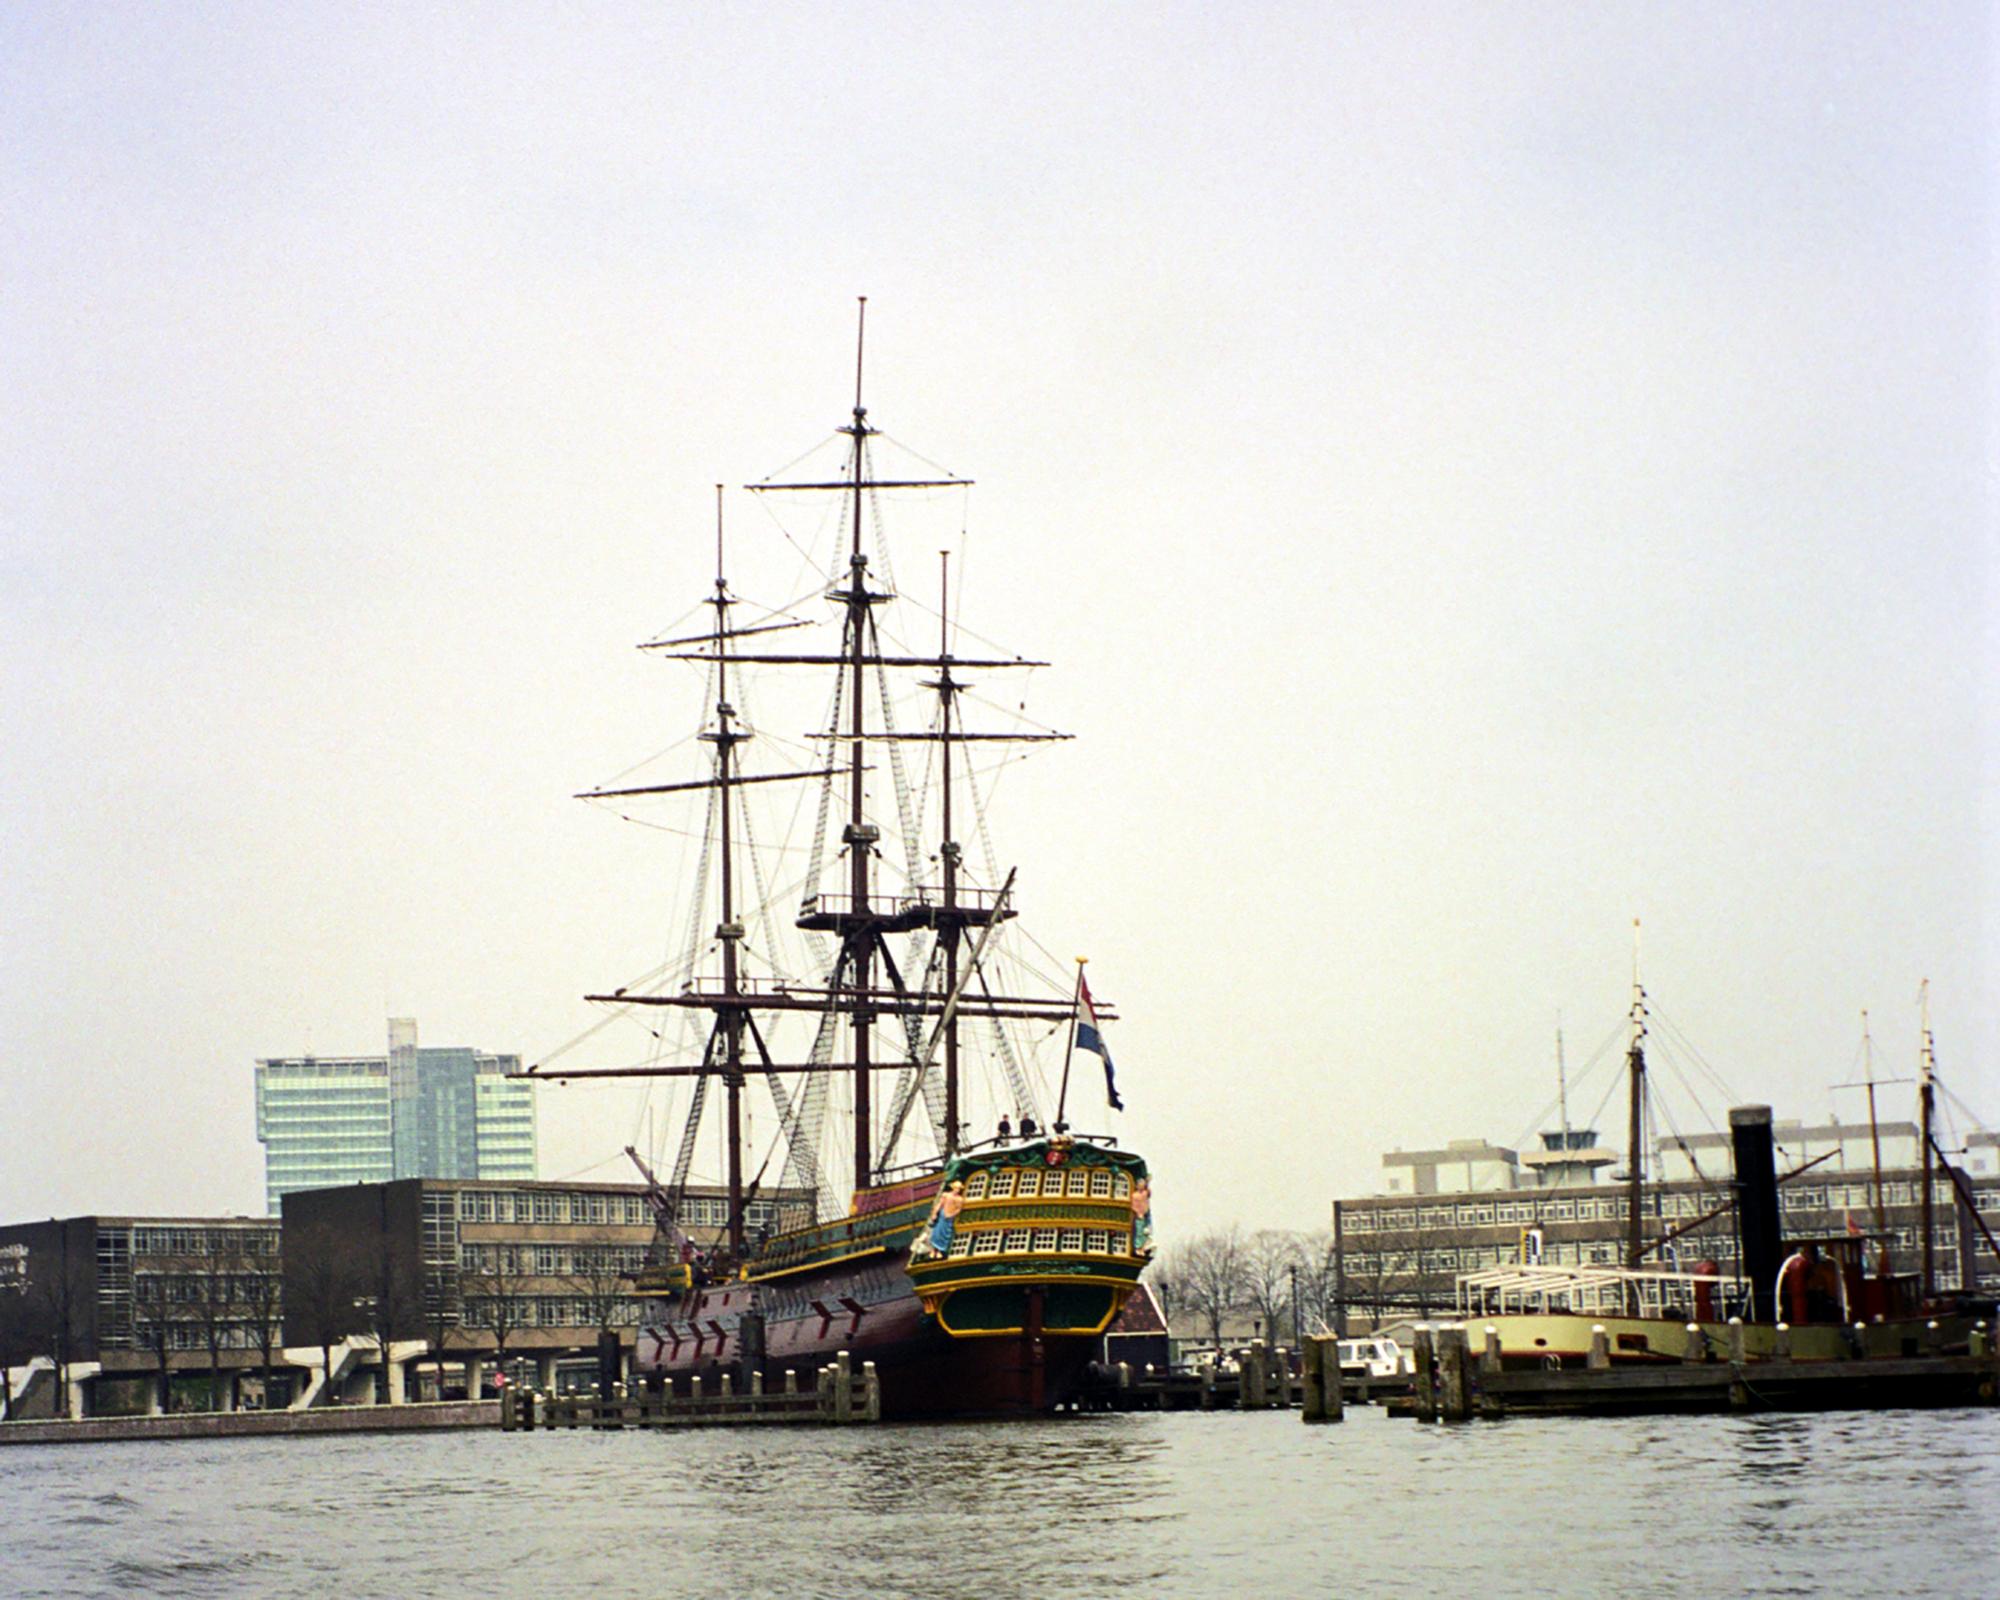 The Netherlands - Harbor Amsterdam #2